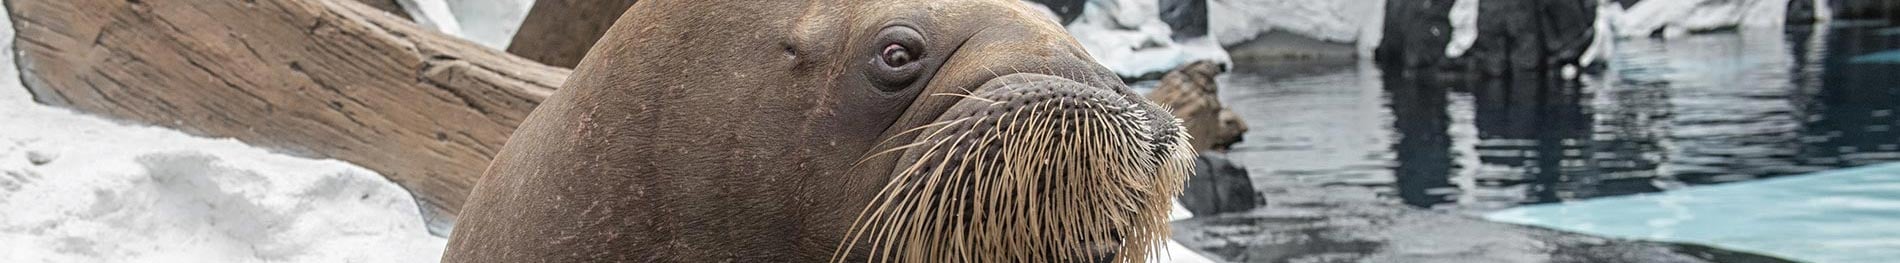 Walrus Up-Close Encounter